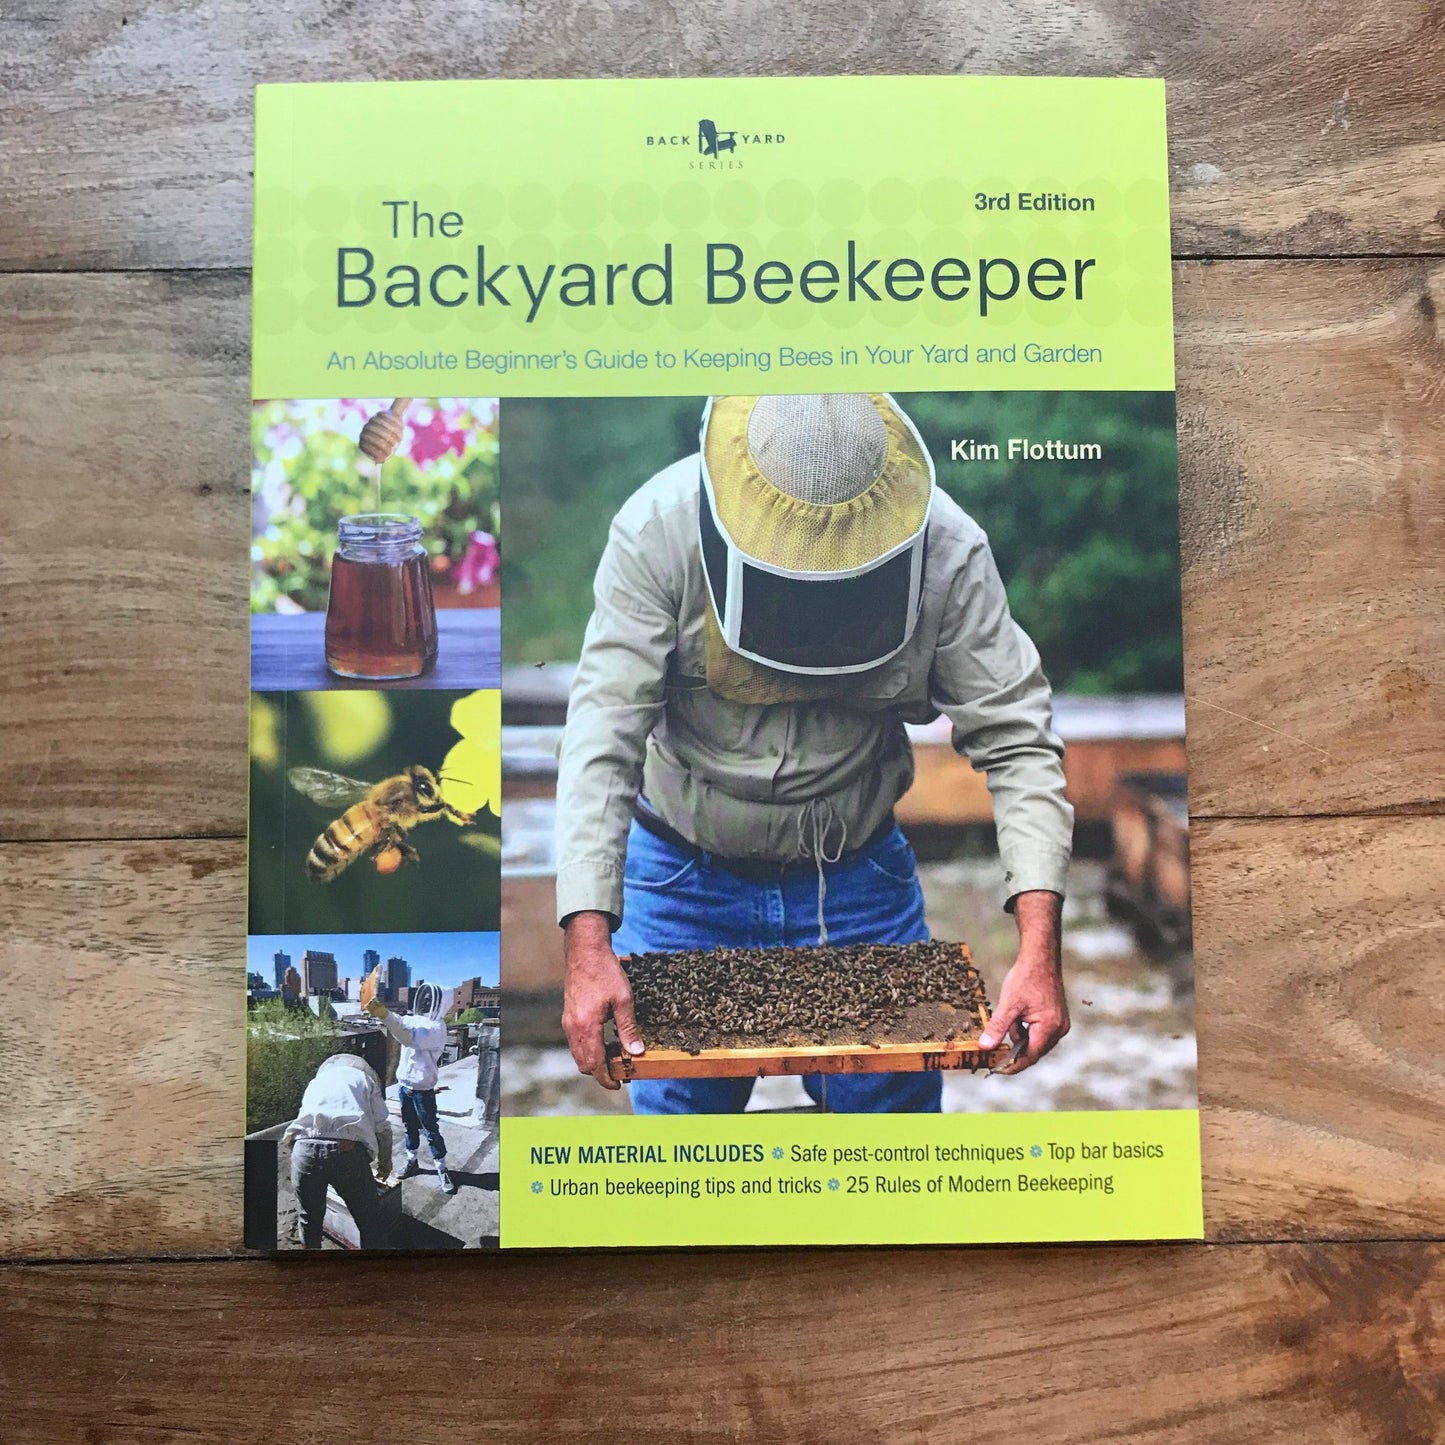 The Backyard Beekeeper, by Kim Flottum